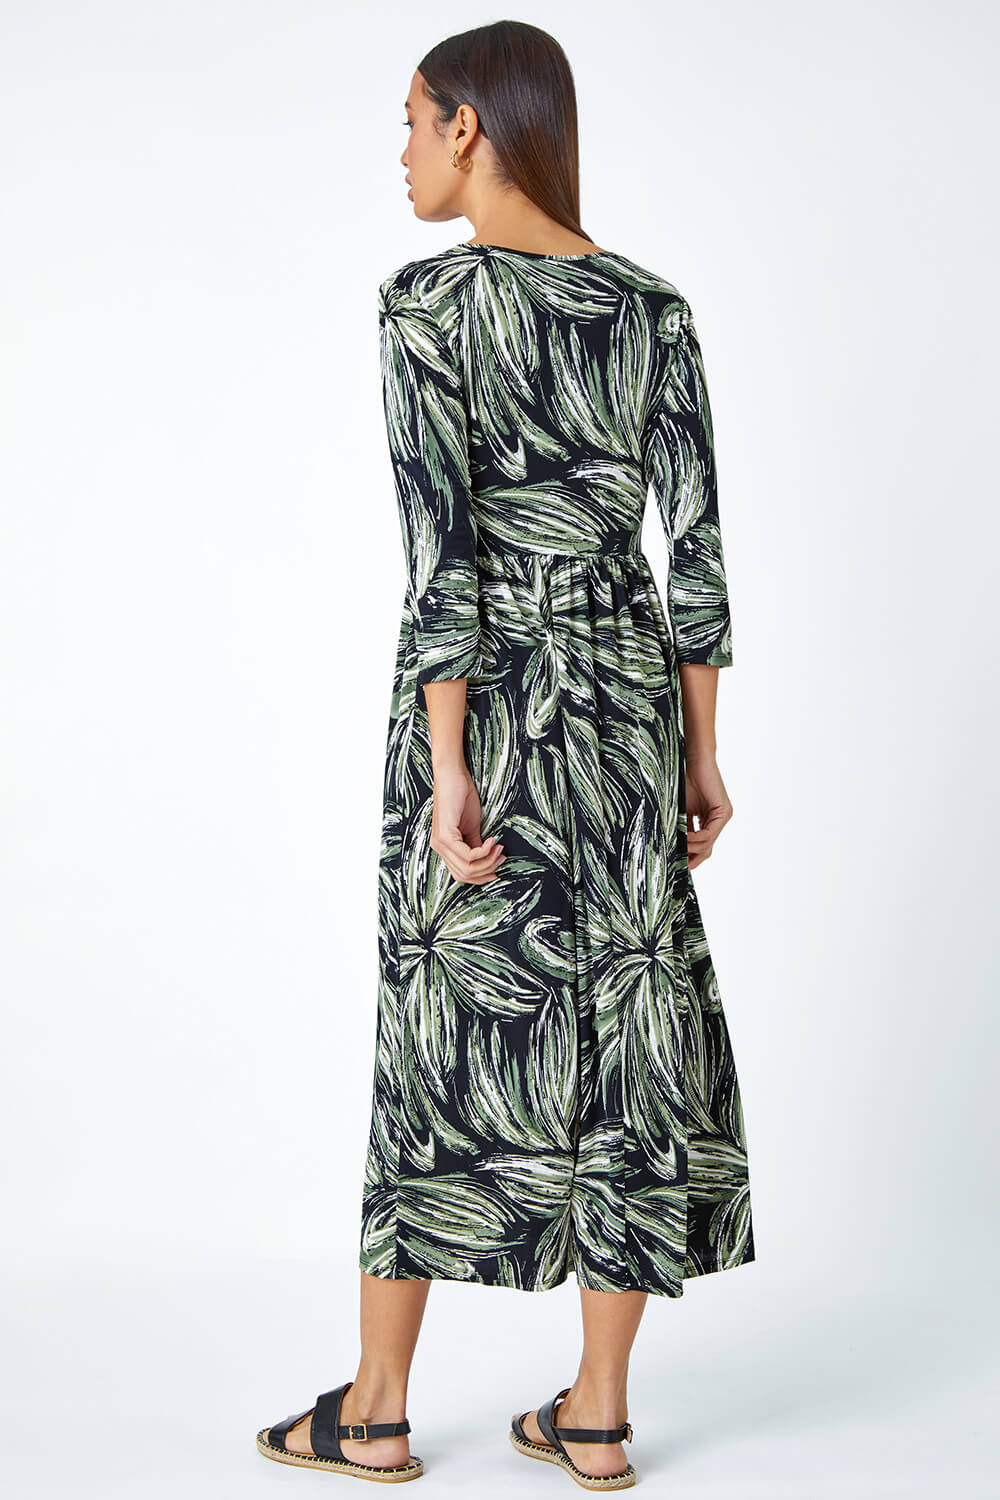 KHAKI Textured Floral Print Midi Stretch Dress, Image 3 of 5